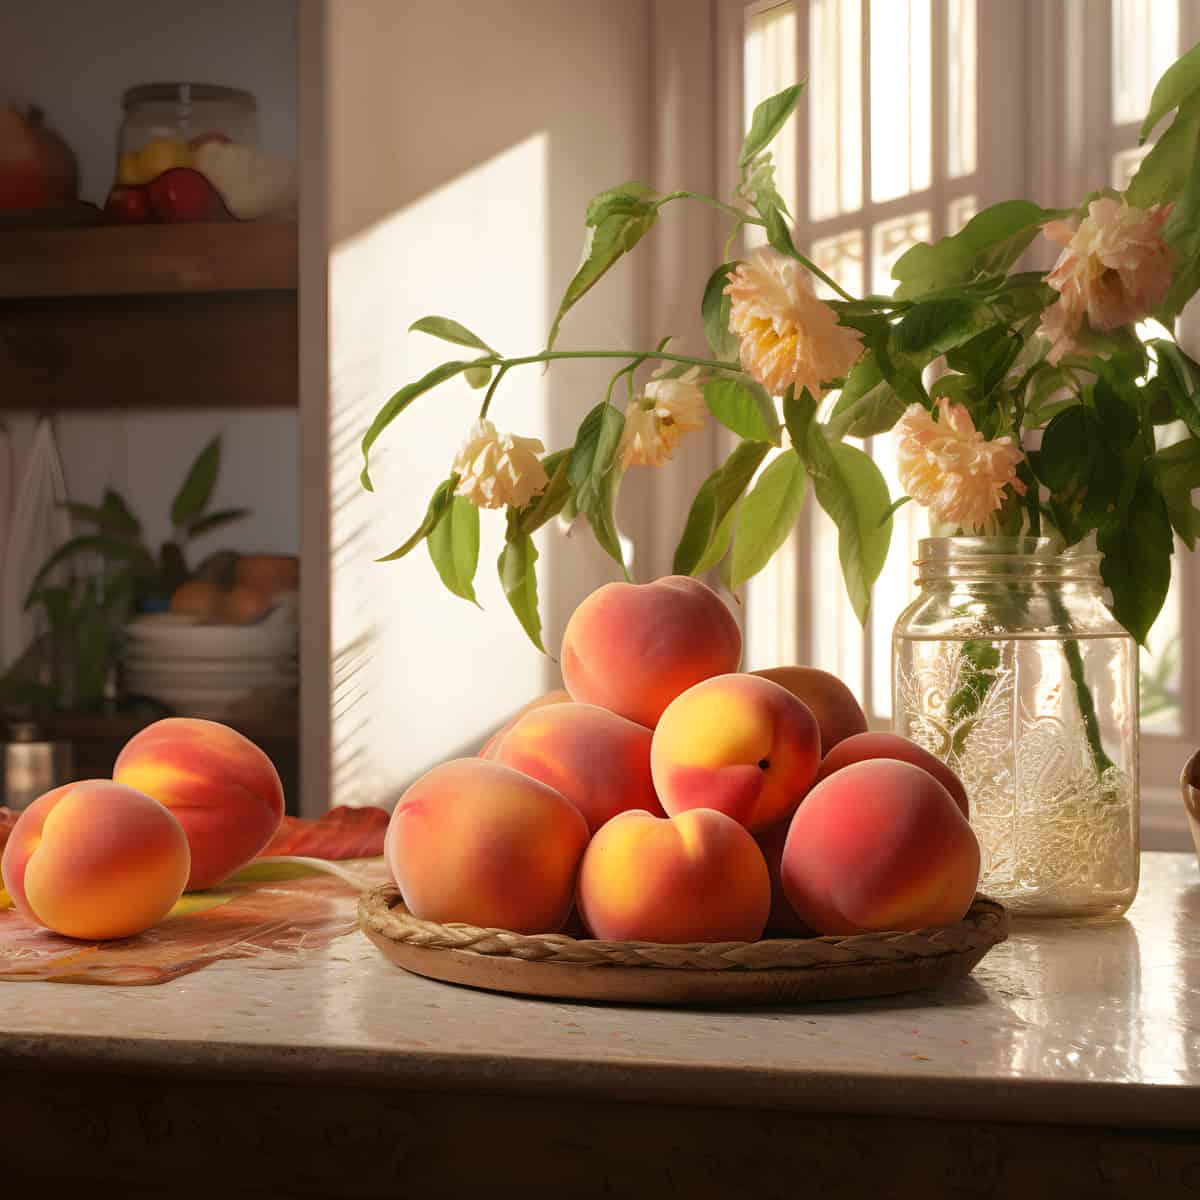 Fergana Peach on a kitchen counter